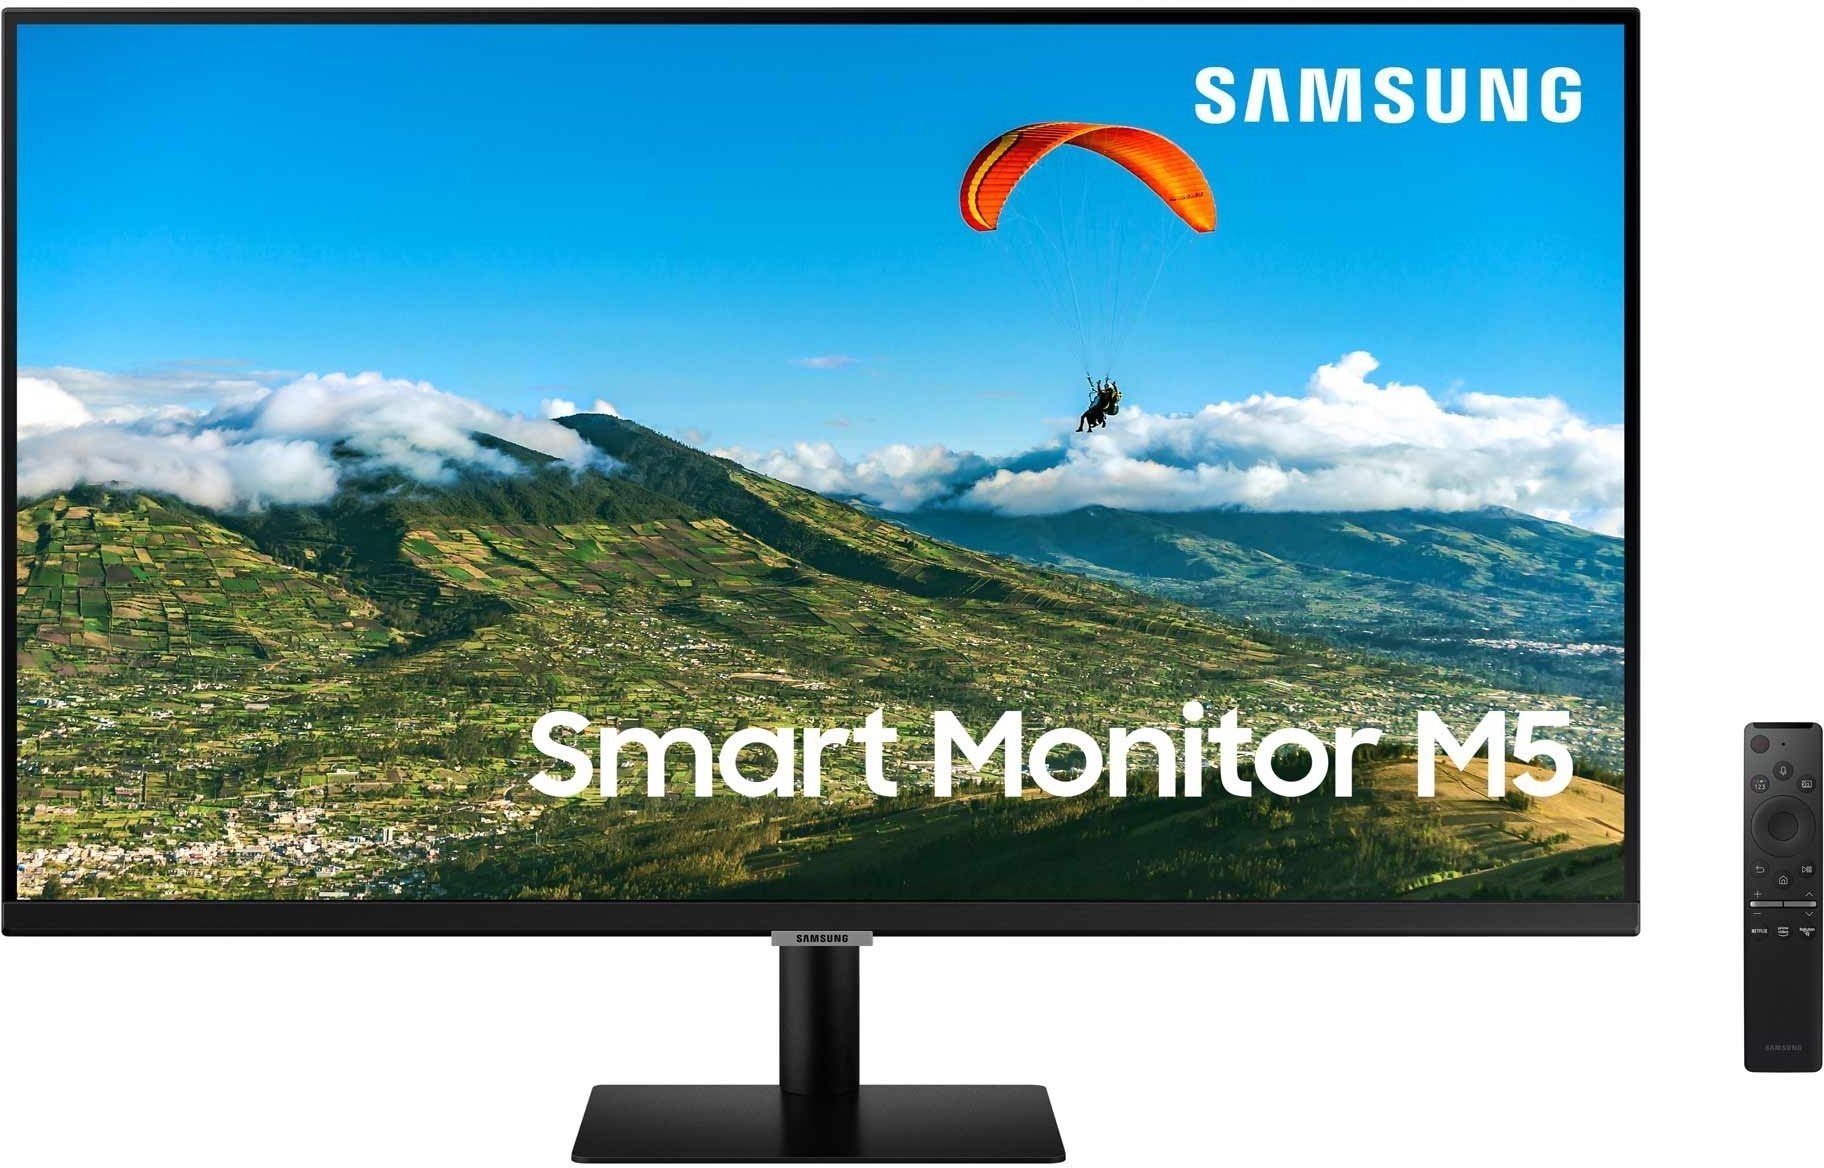 LCD Monitor 27“ Samsung Smart Monitor M5 Screen